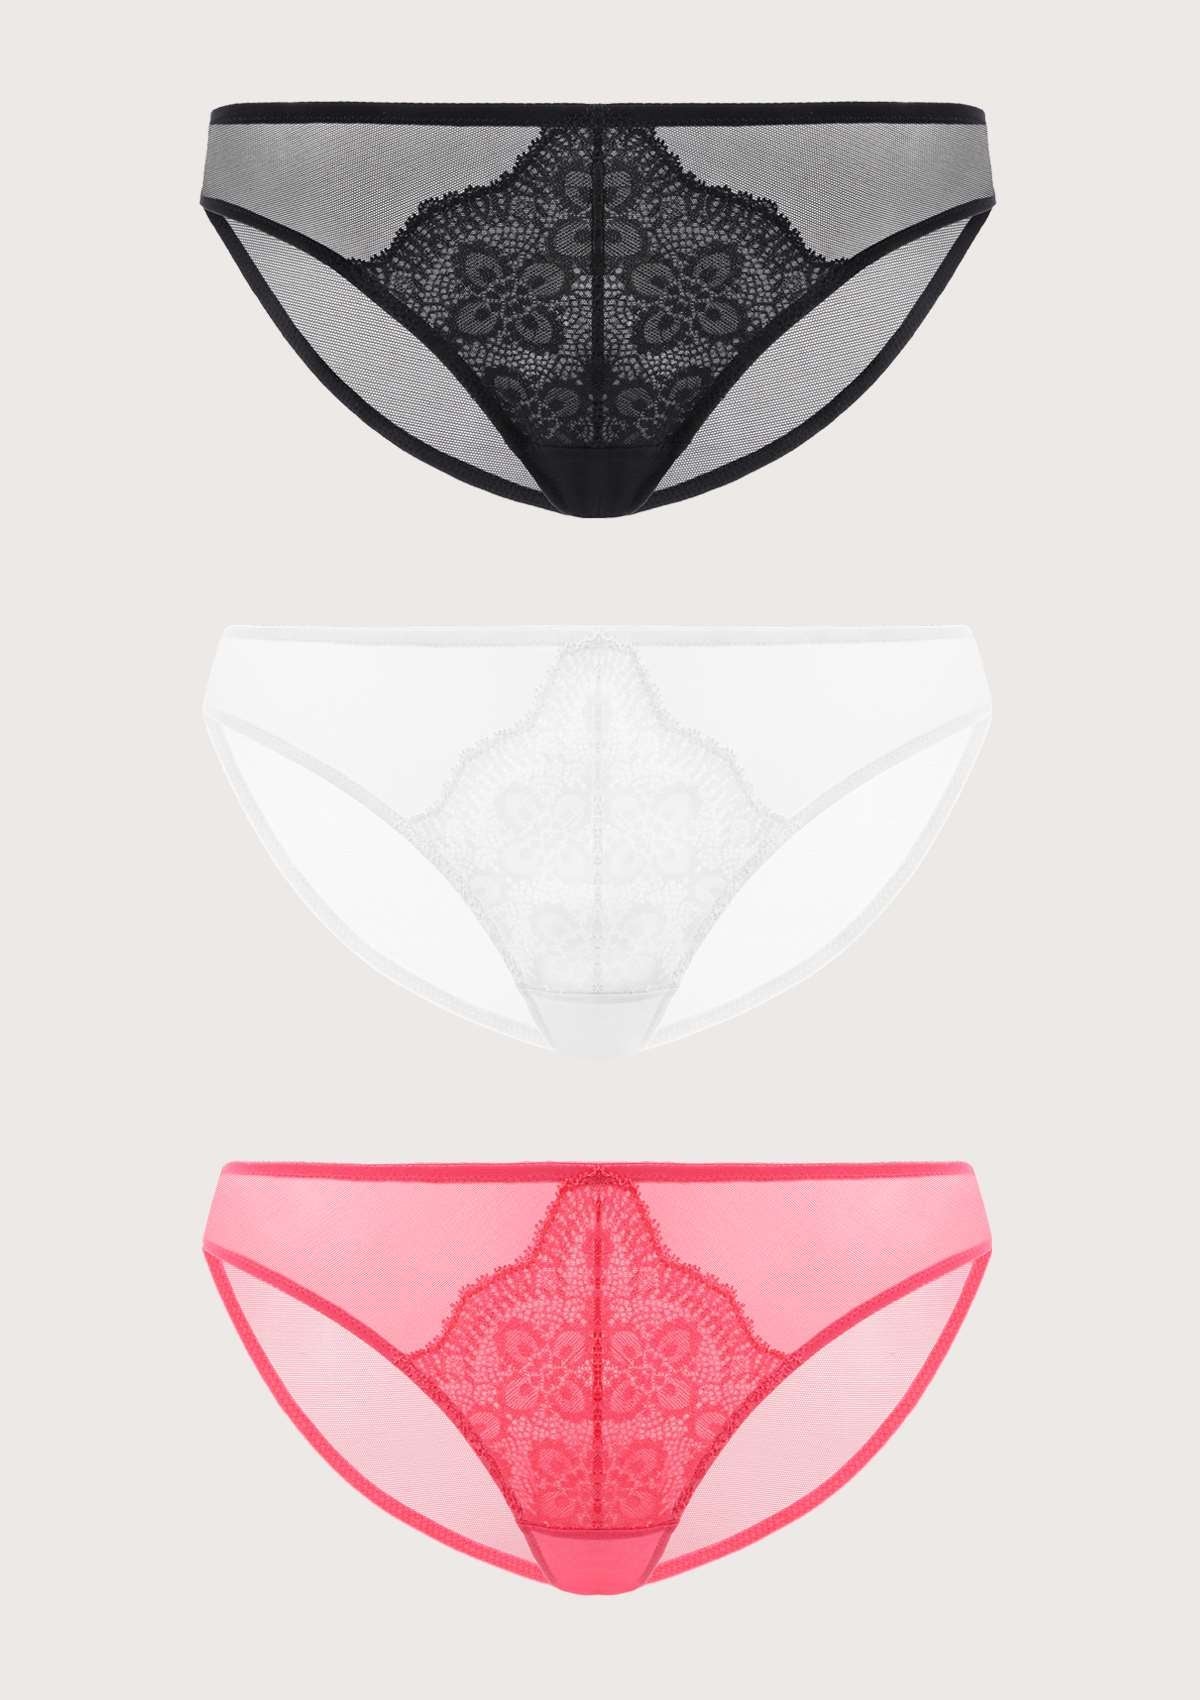 HSIA Front Flower Lace Bikini Underwear 3 Pack - S / Black+White+Pink